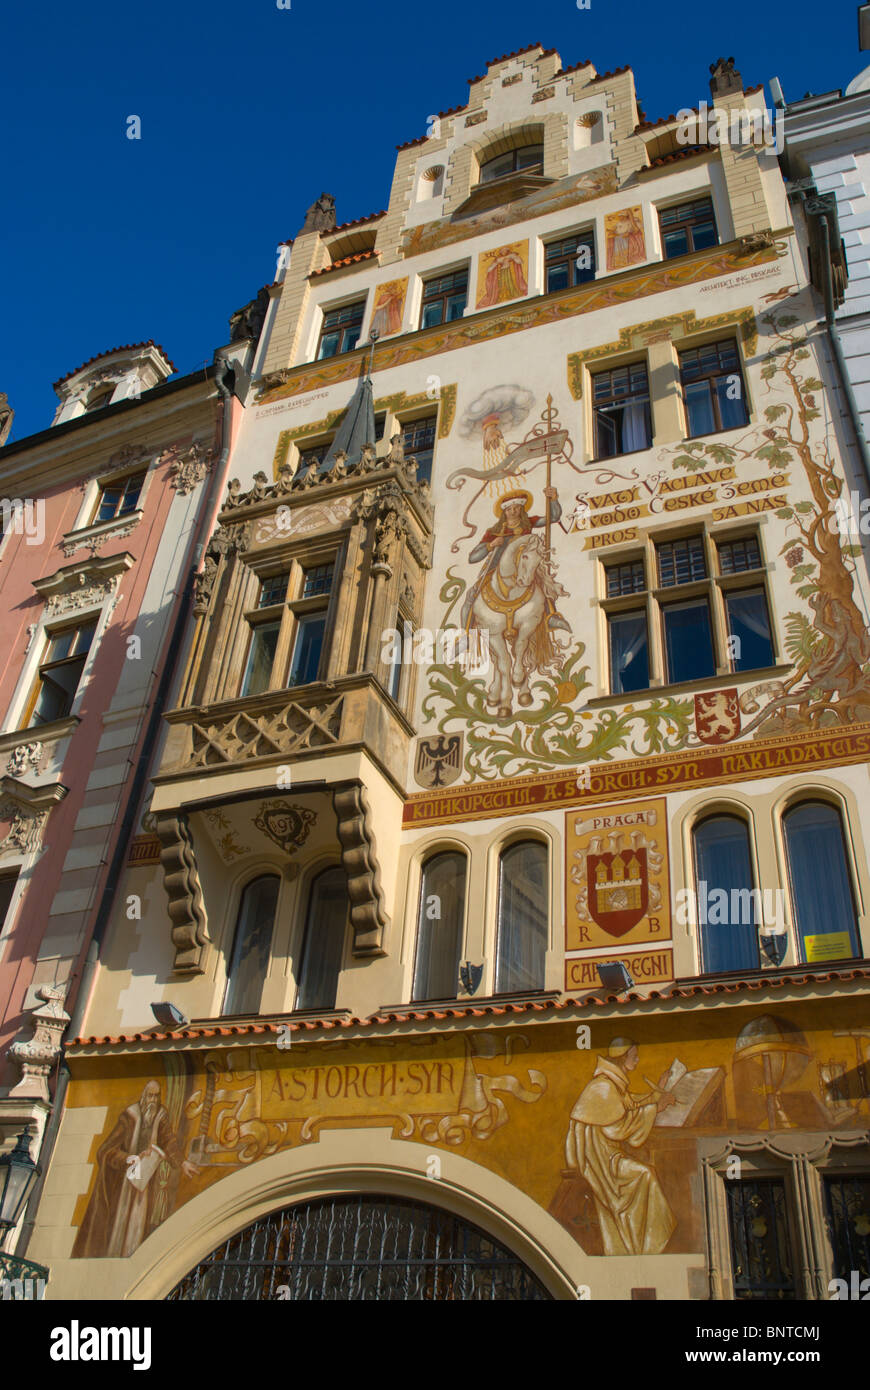 U Storch house at Staromestske namesti the old town square Prague Czech Republic Europe Stock Photo